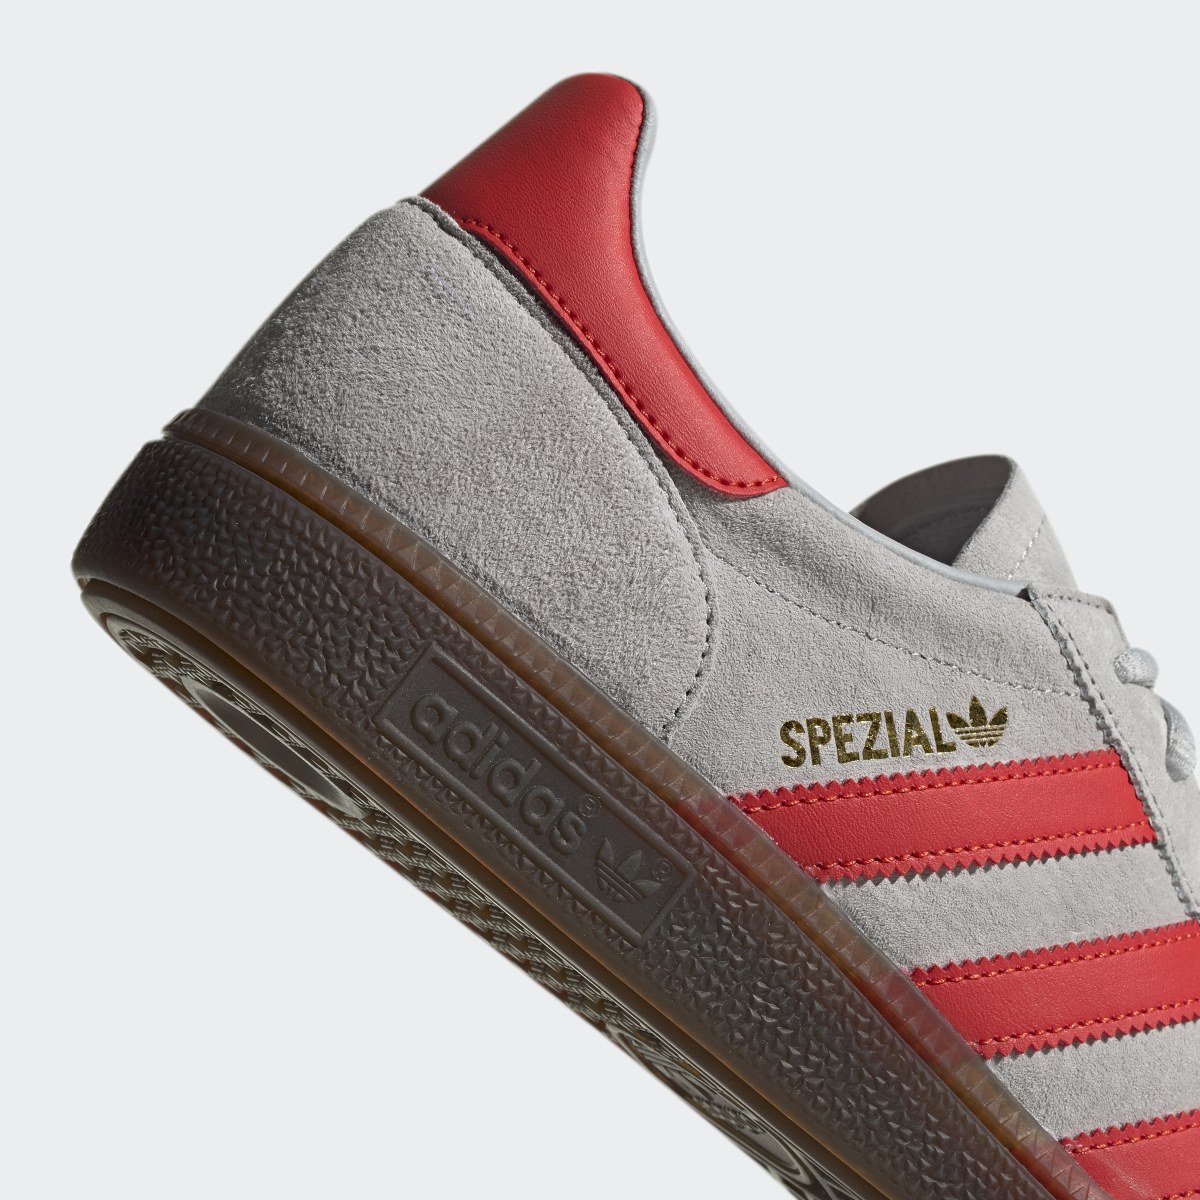 Adidas Handball Spezial Shoes. 11